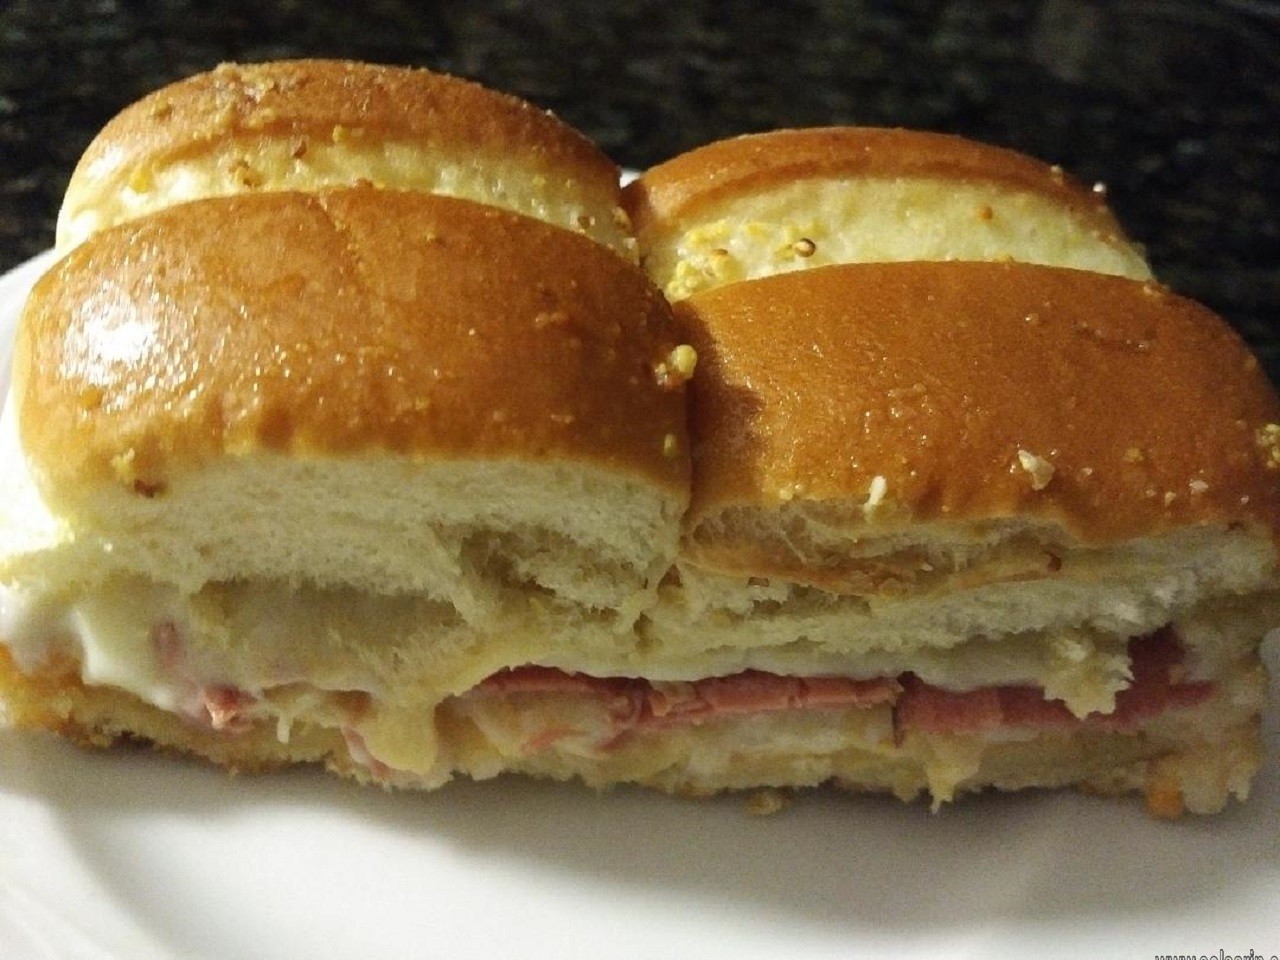 ham sandwich on hawaiian rolls